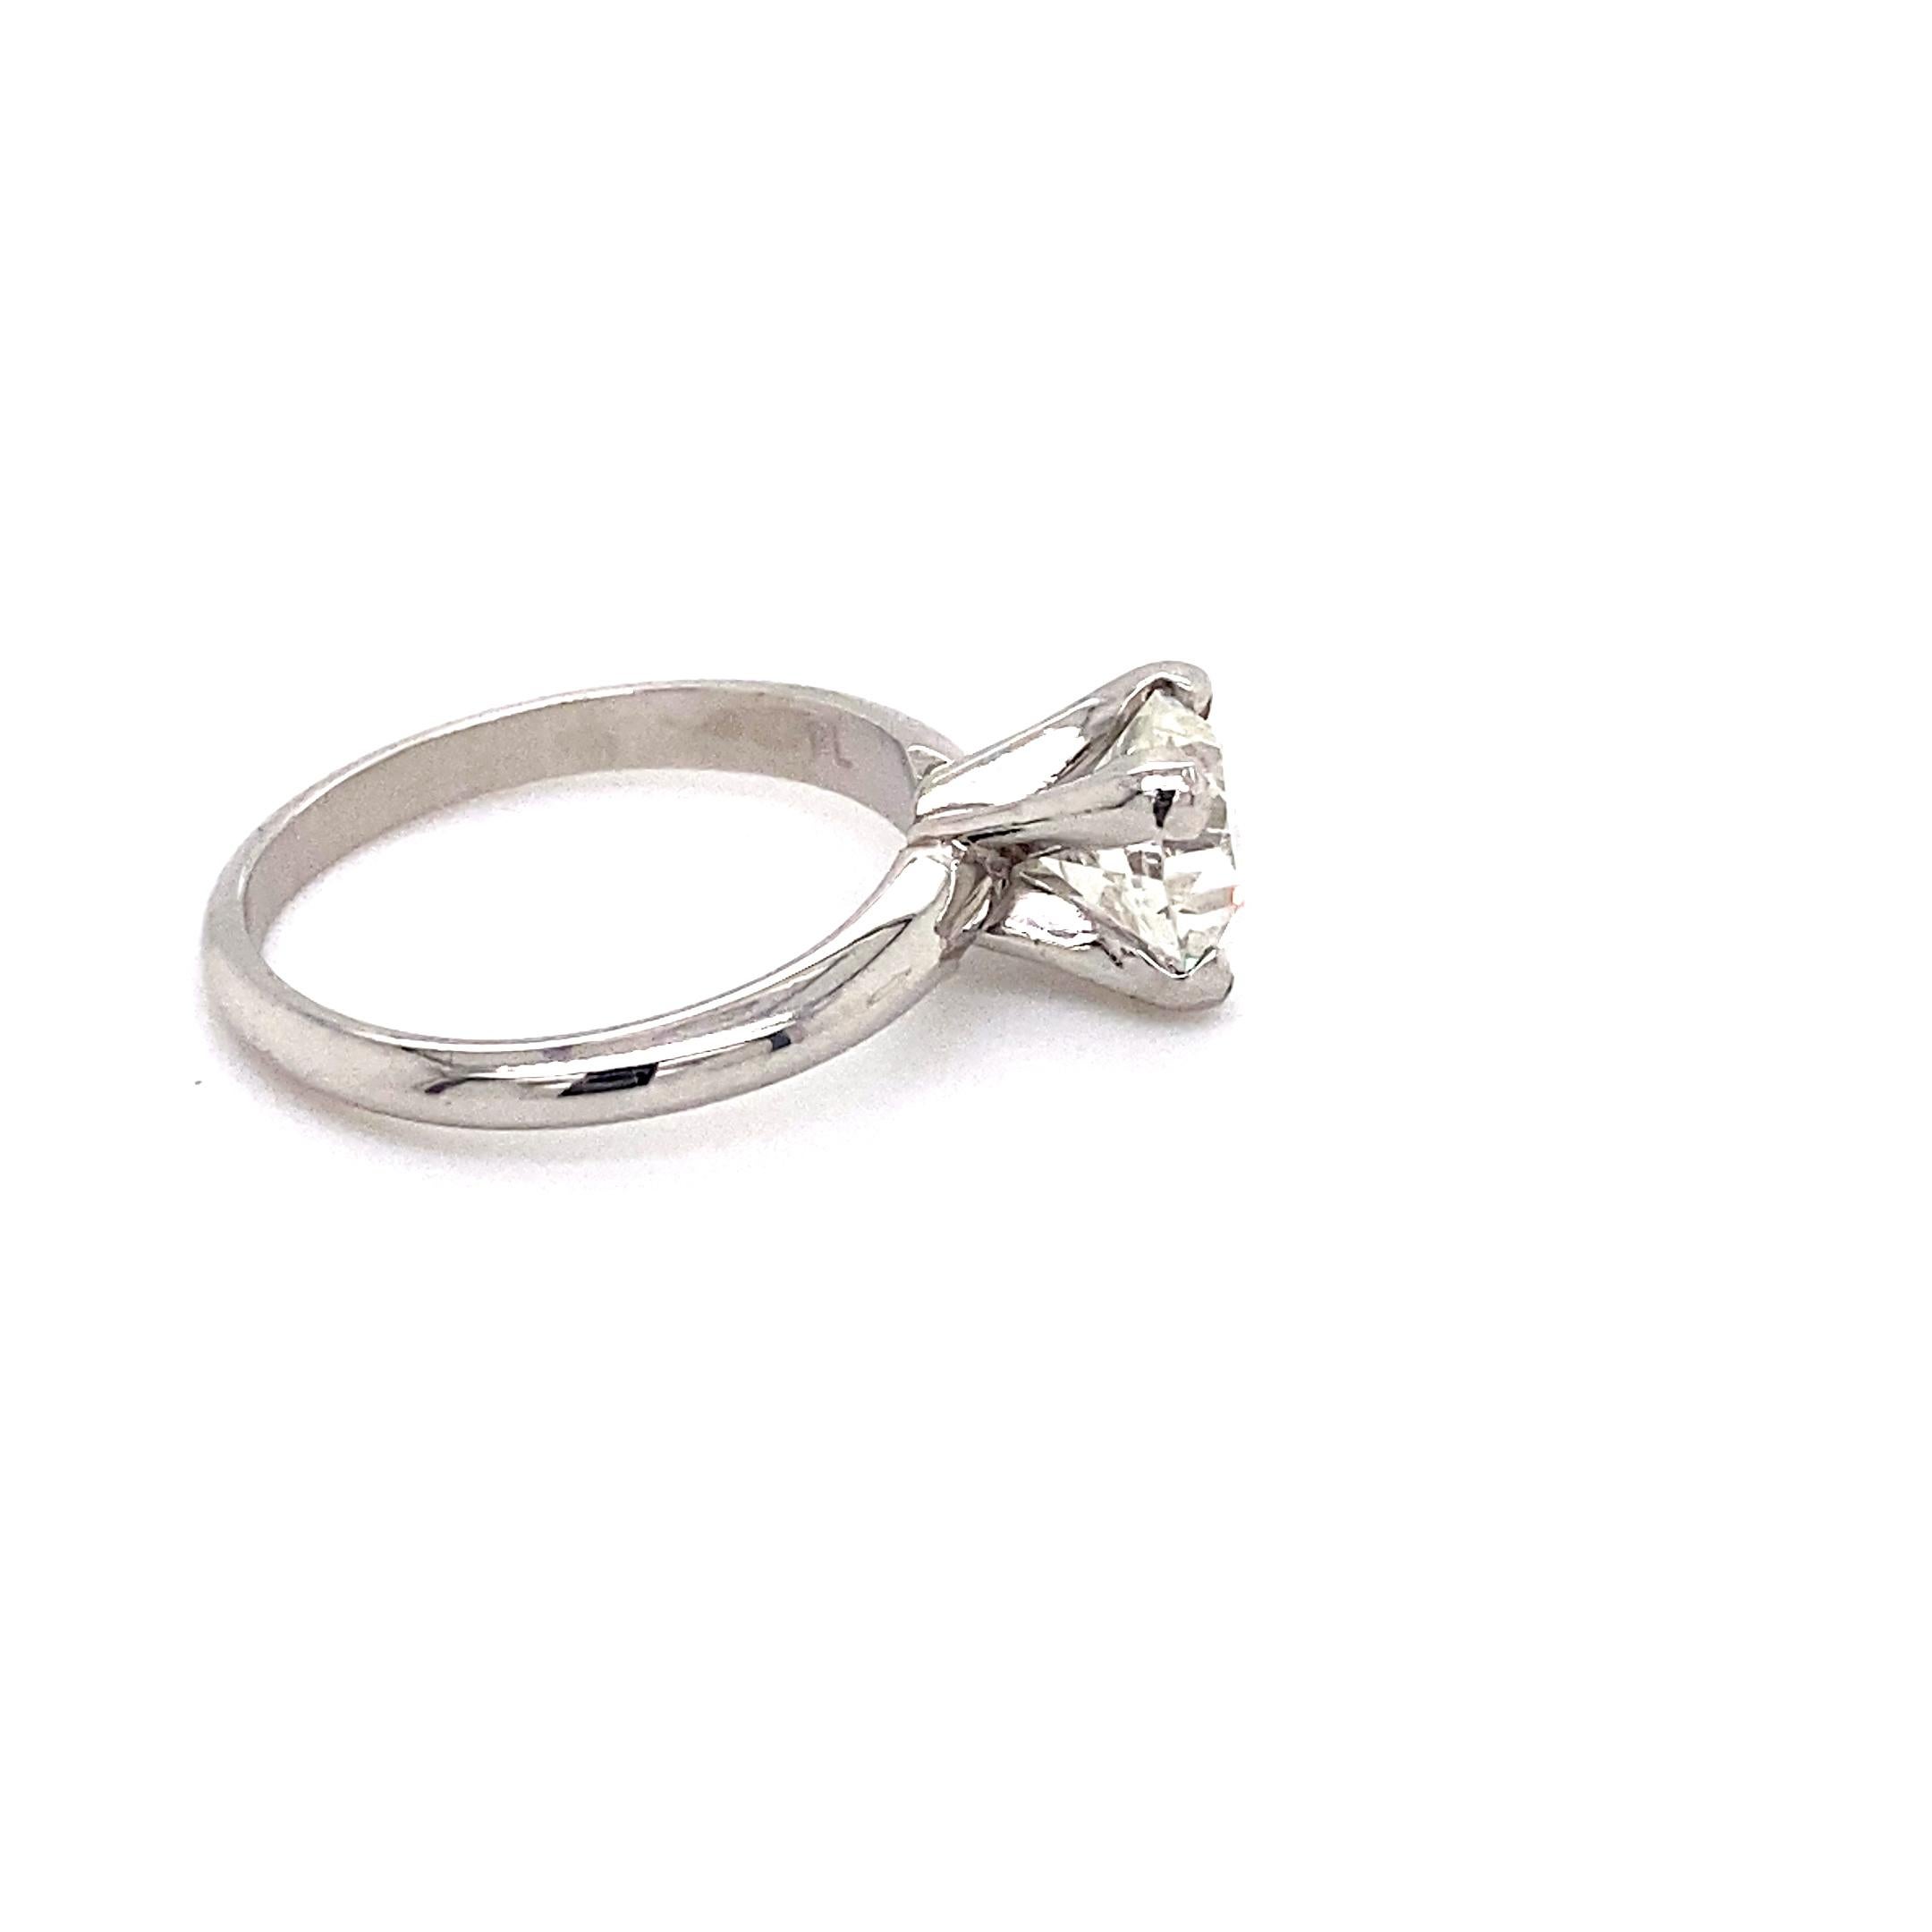 1.56 carat diamond ring